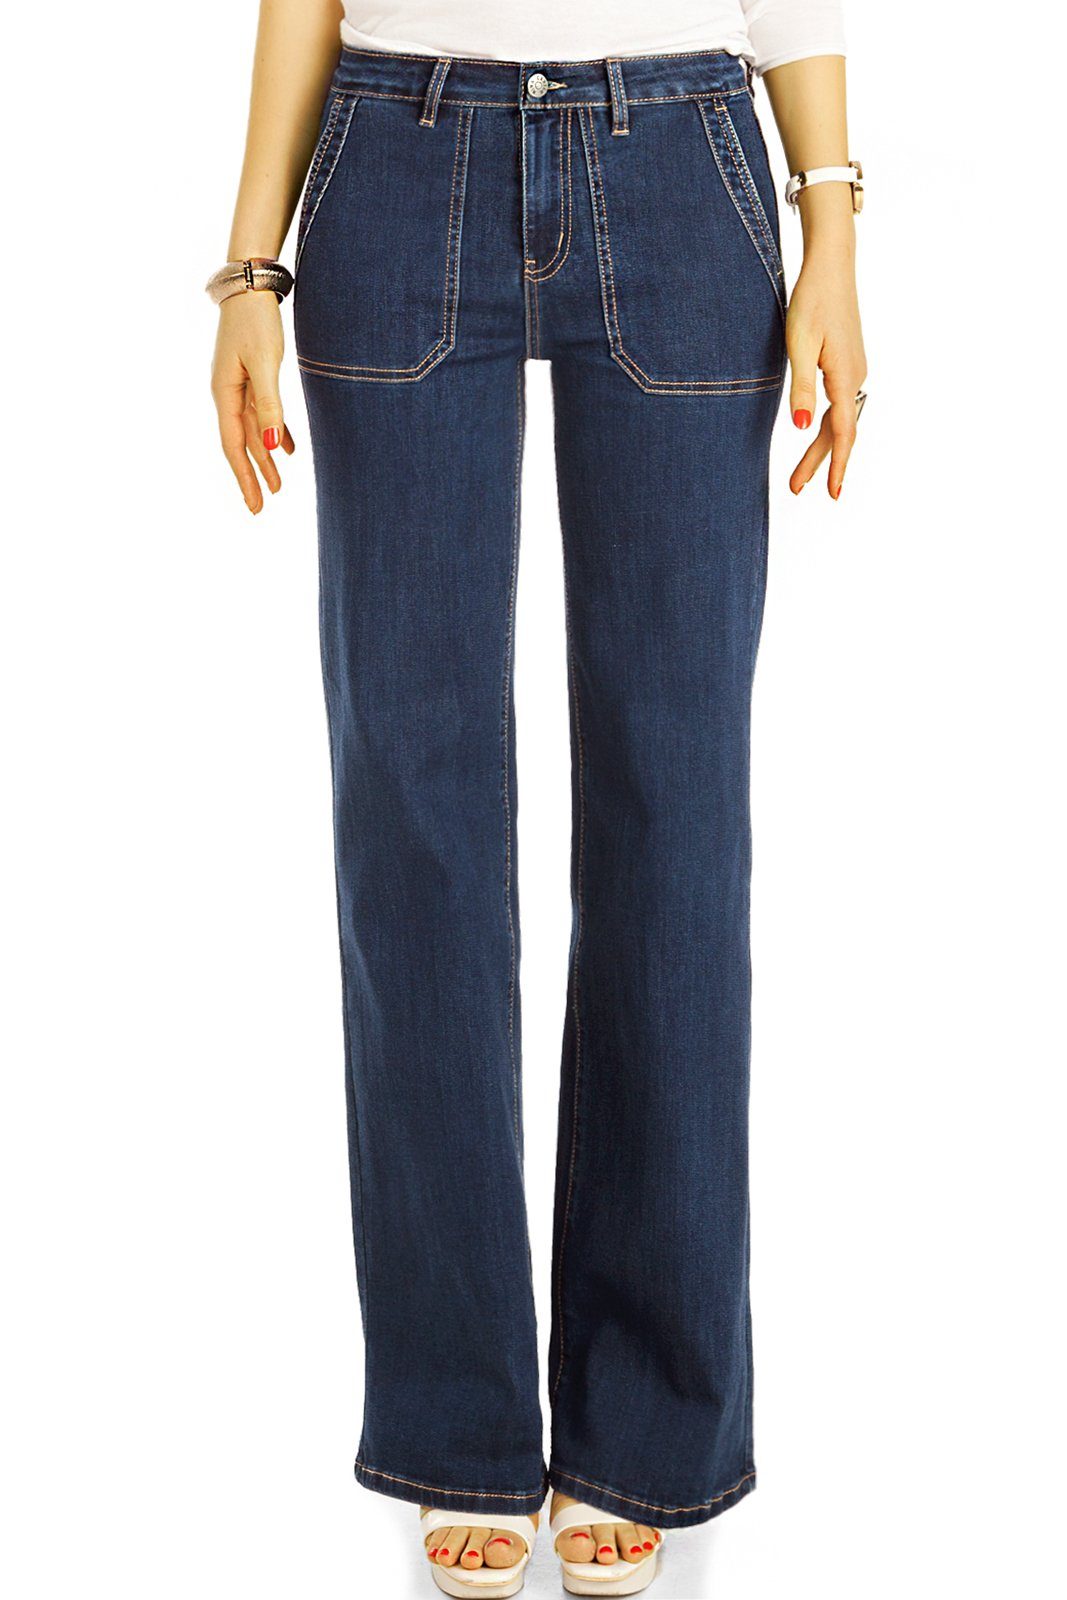 be styled Bootcut-Jeans Bootcut Jeans, medium waist Hosen straight Passform - Damen - j31k mit Stretch-Anteil, 5-Pocket-Style dunkelblau